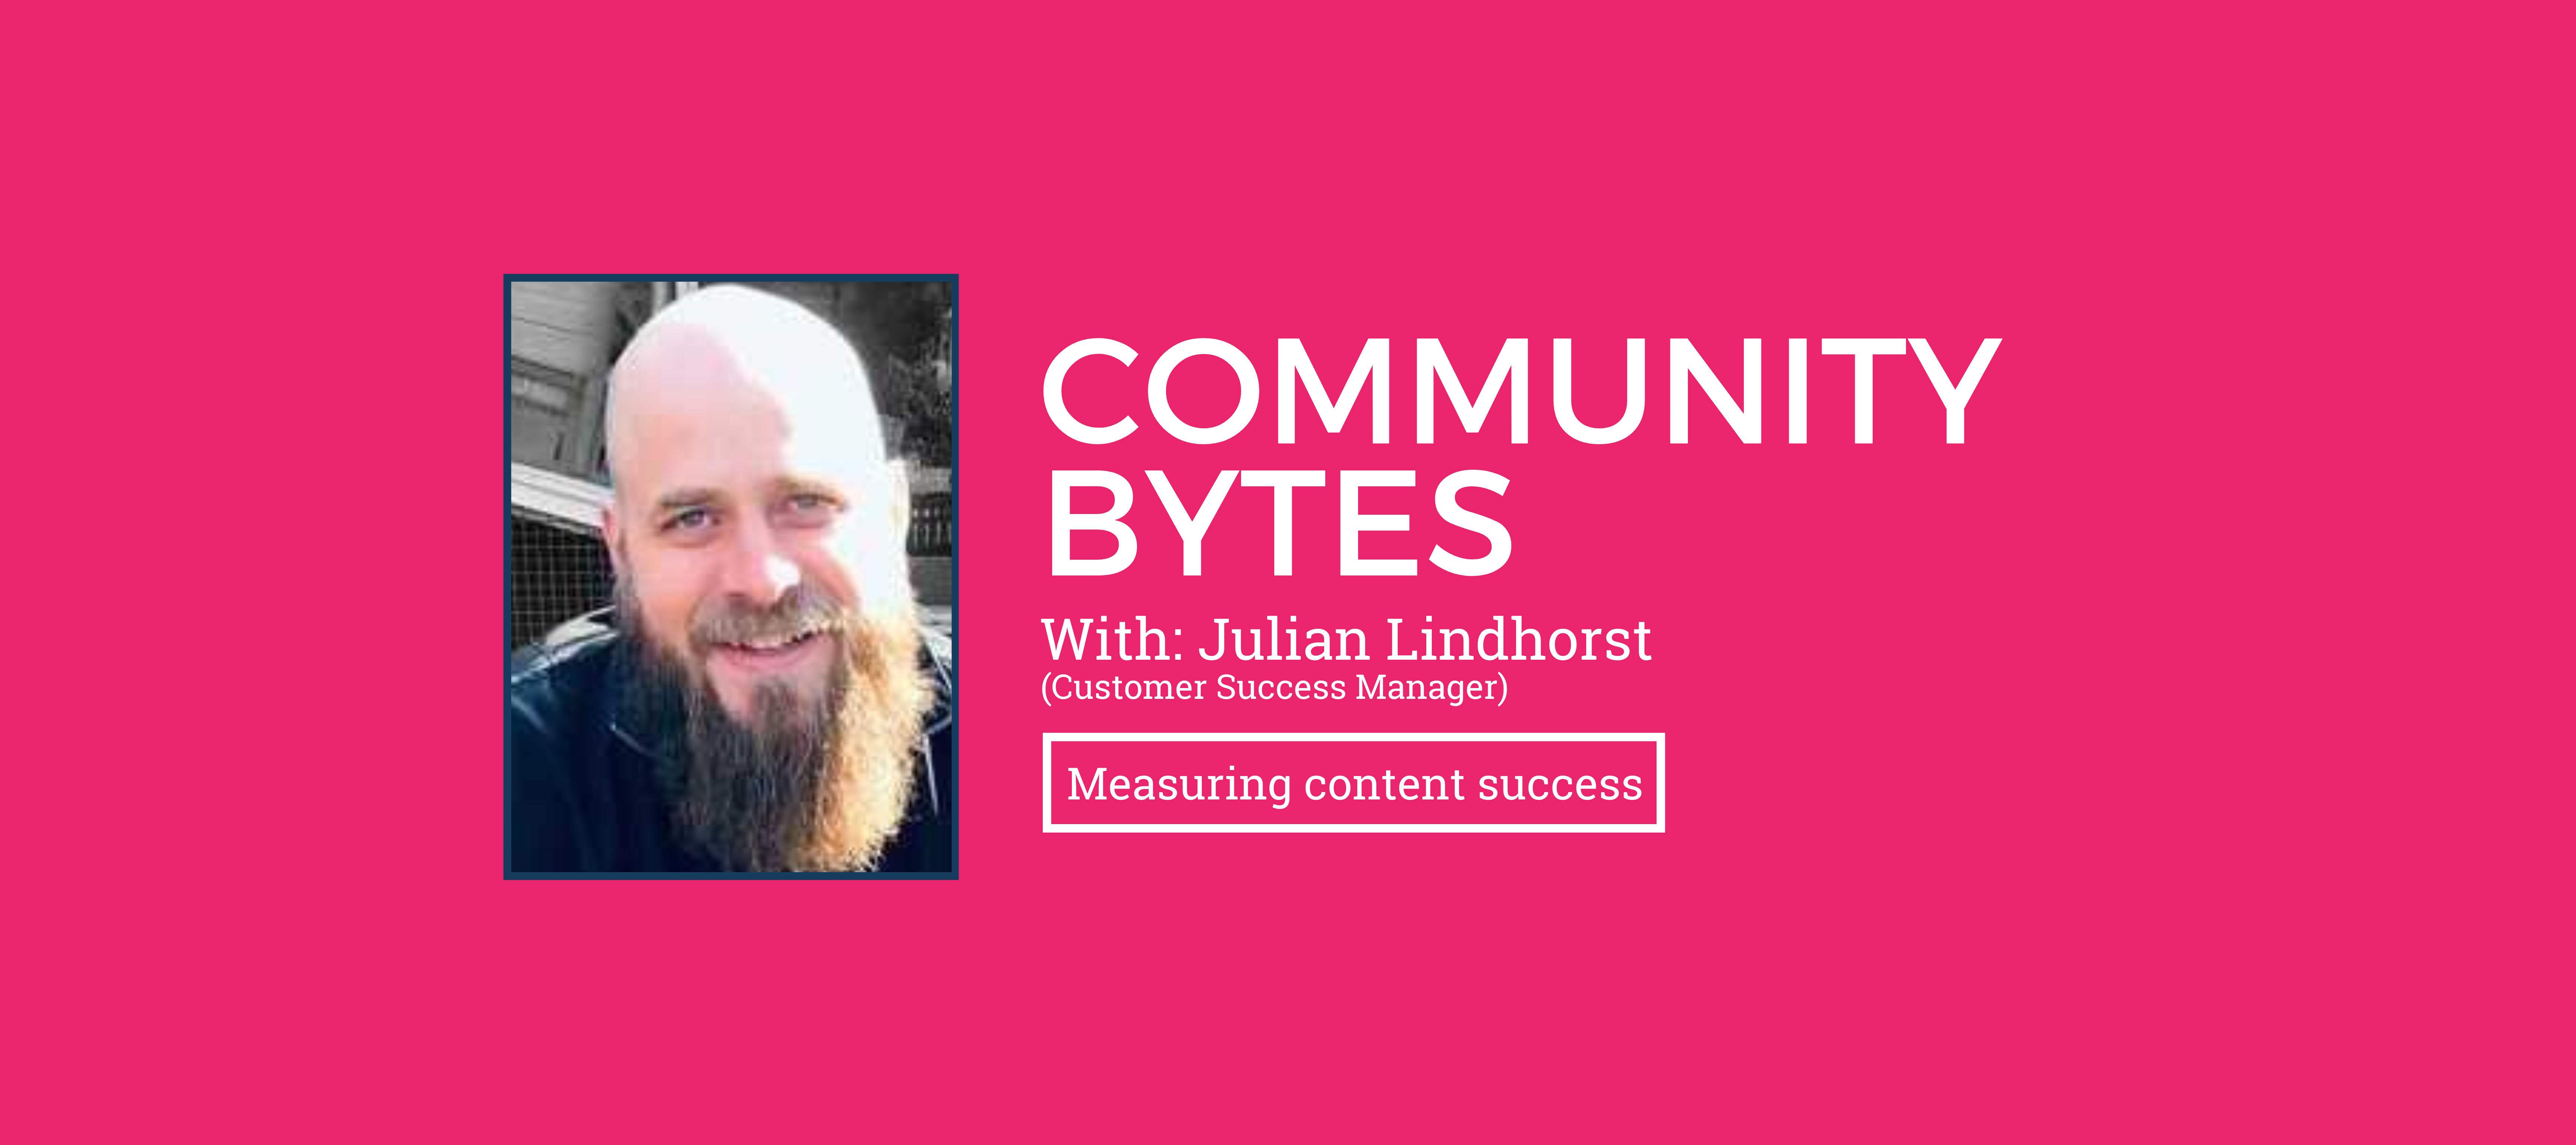 Community Bytes w/ Julian Lindhorst: Measuring content success on community